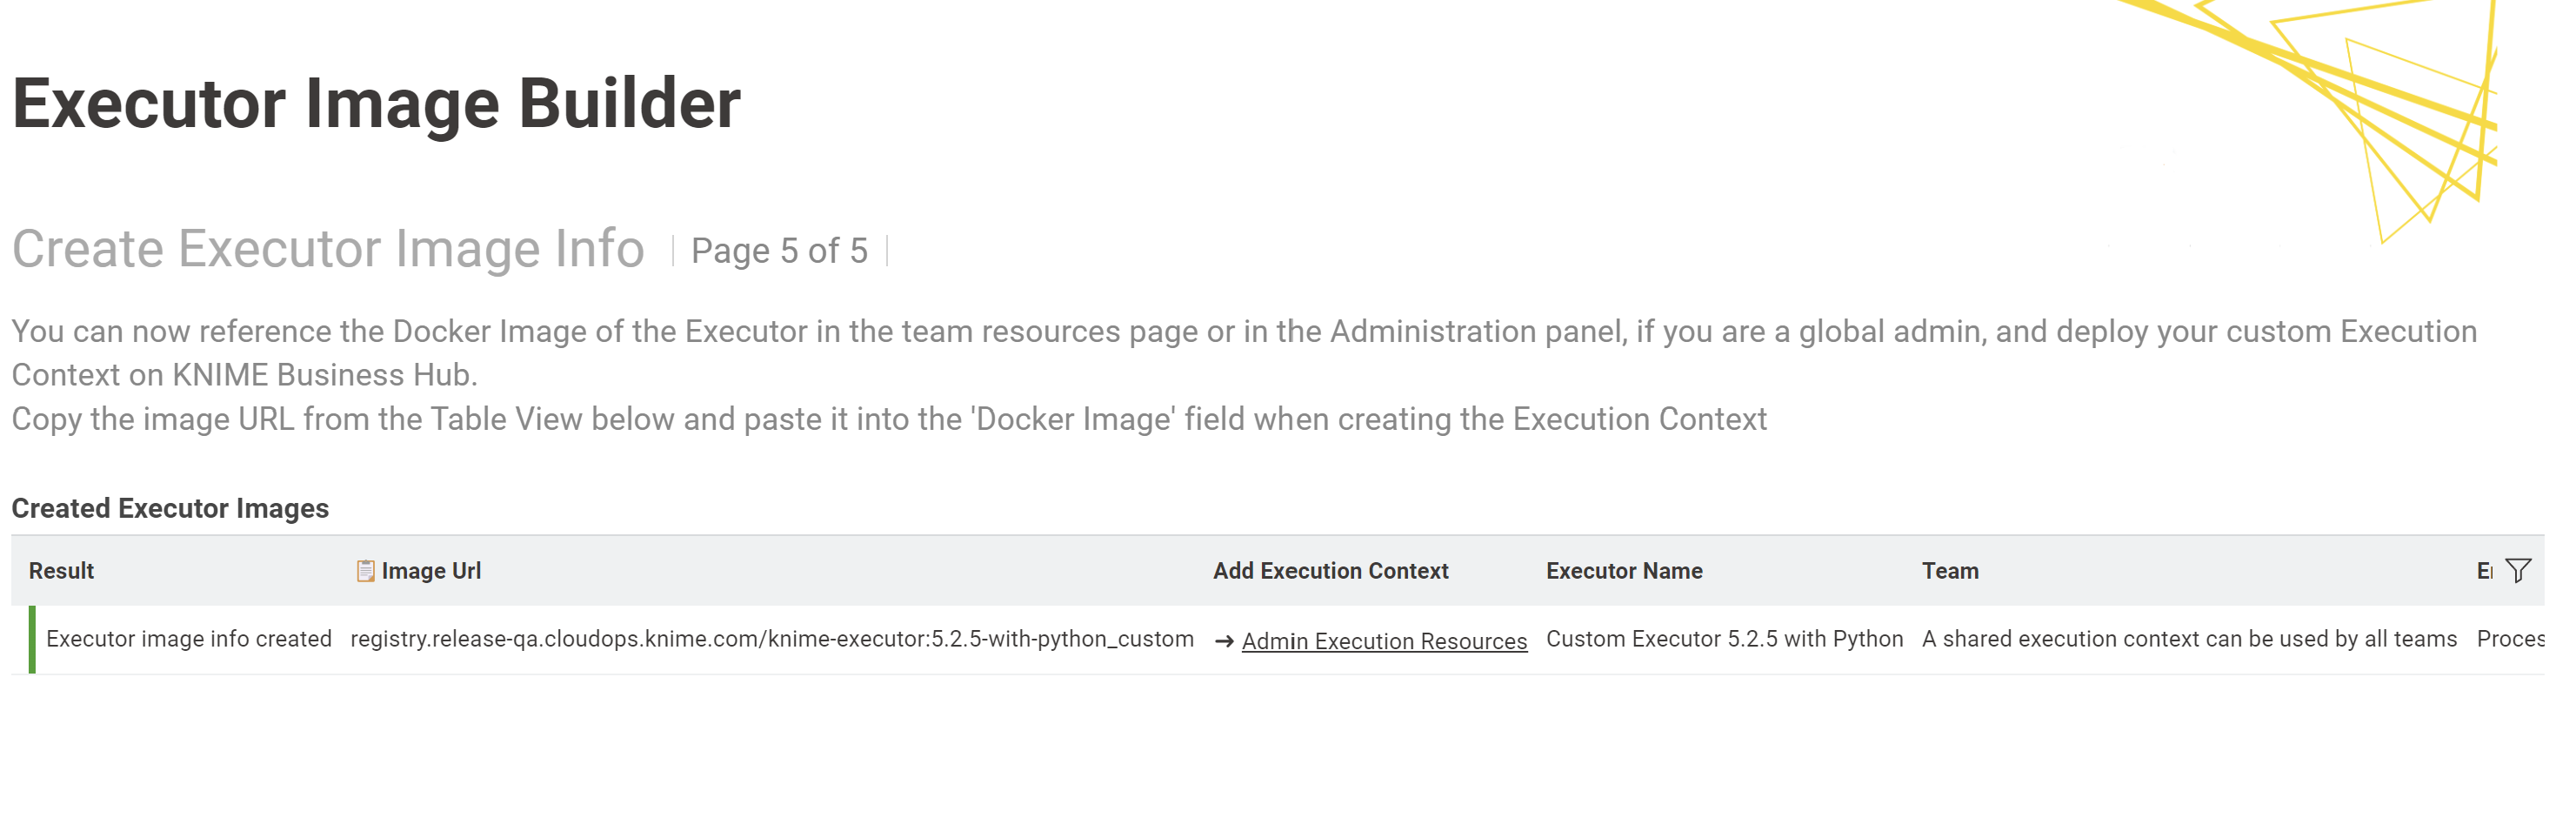 executor image builder data app page5